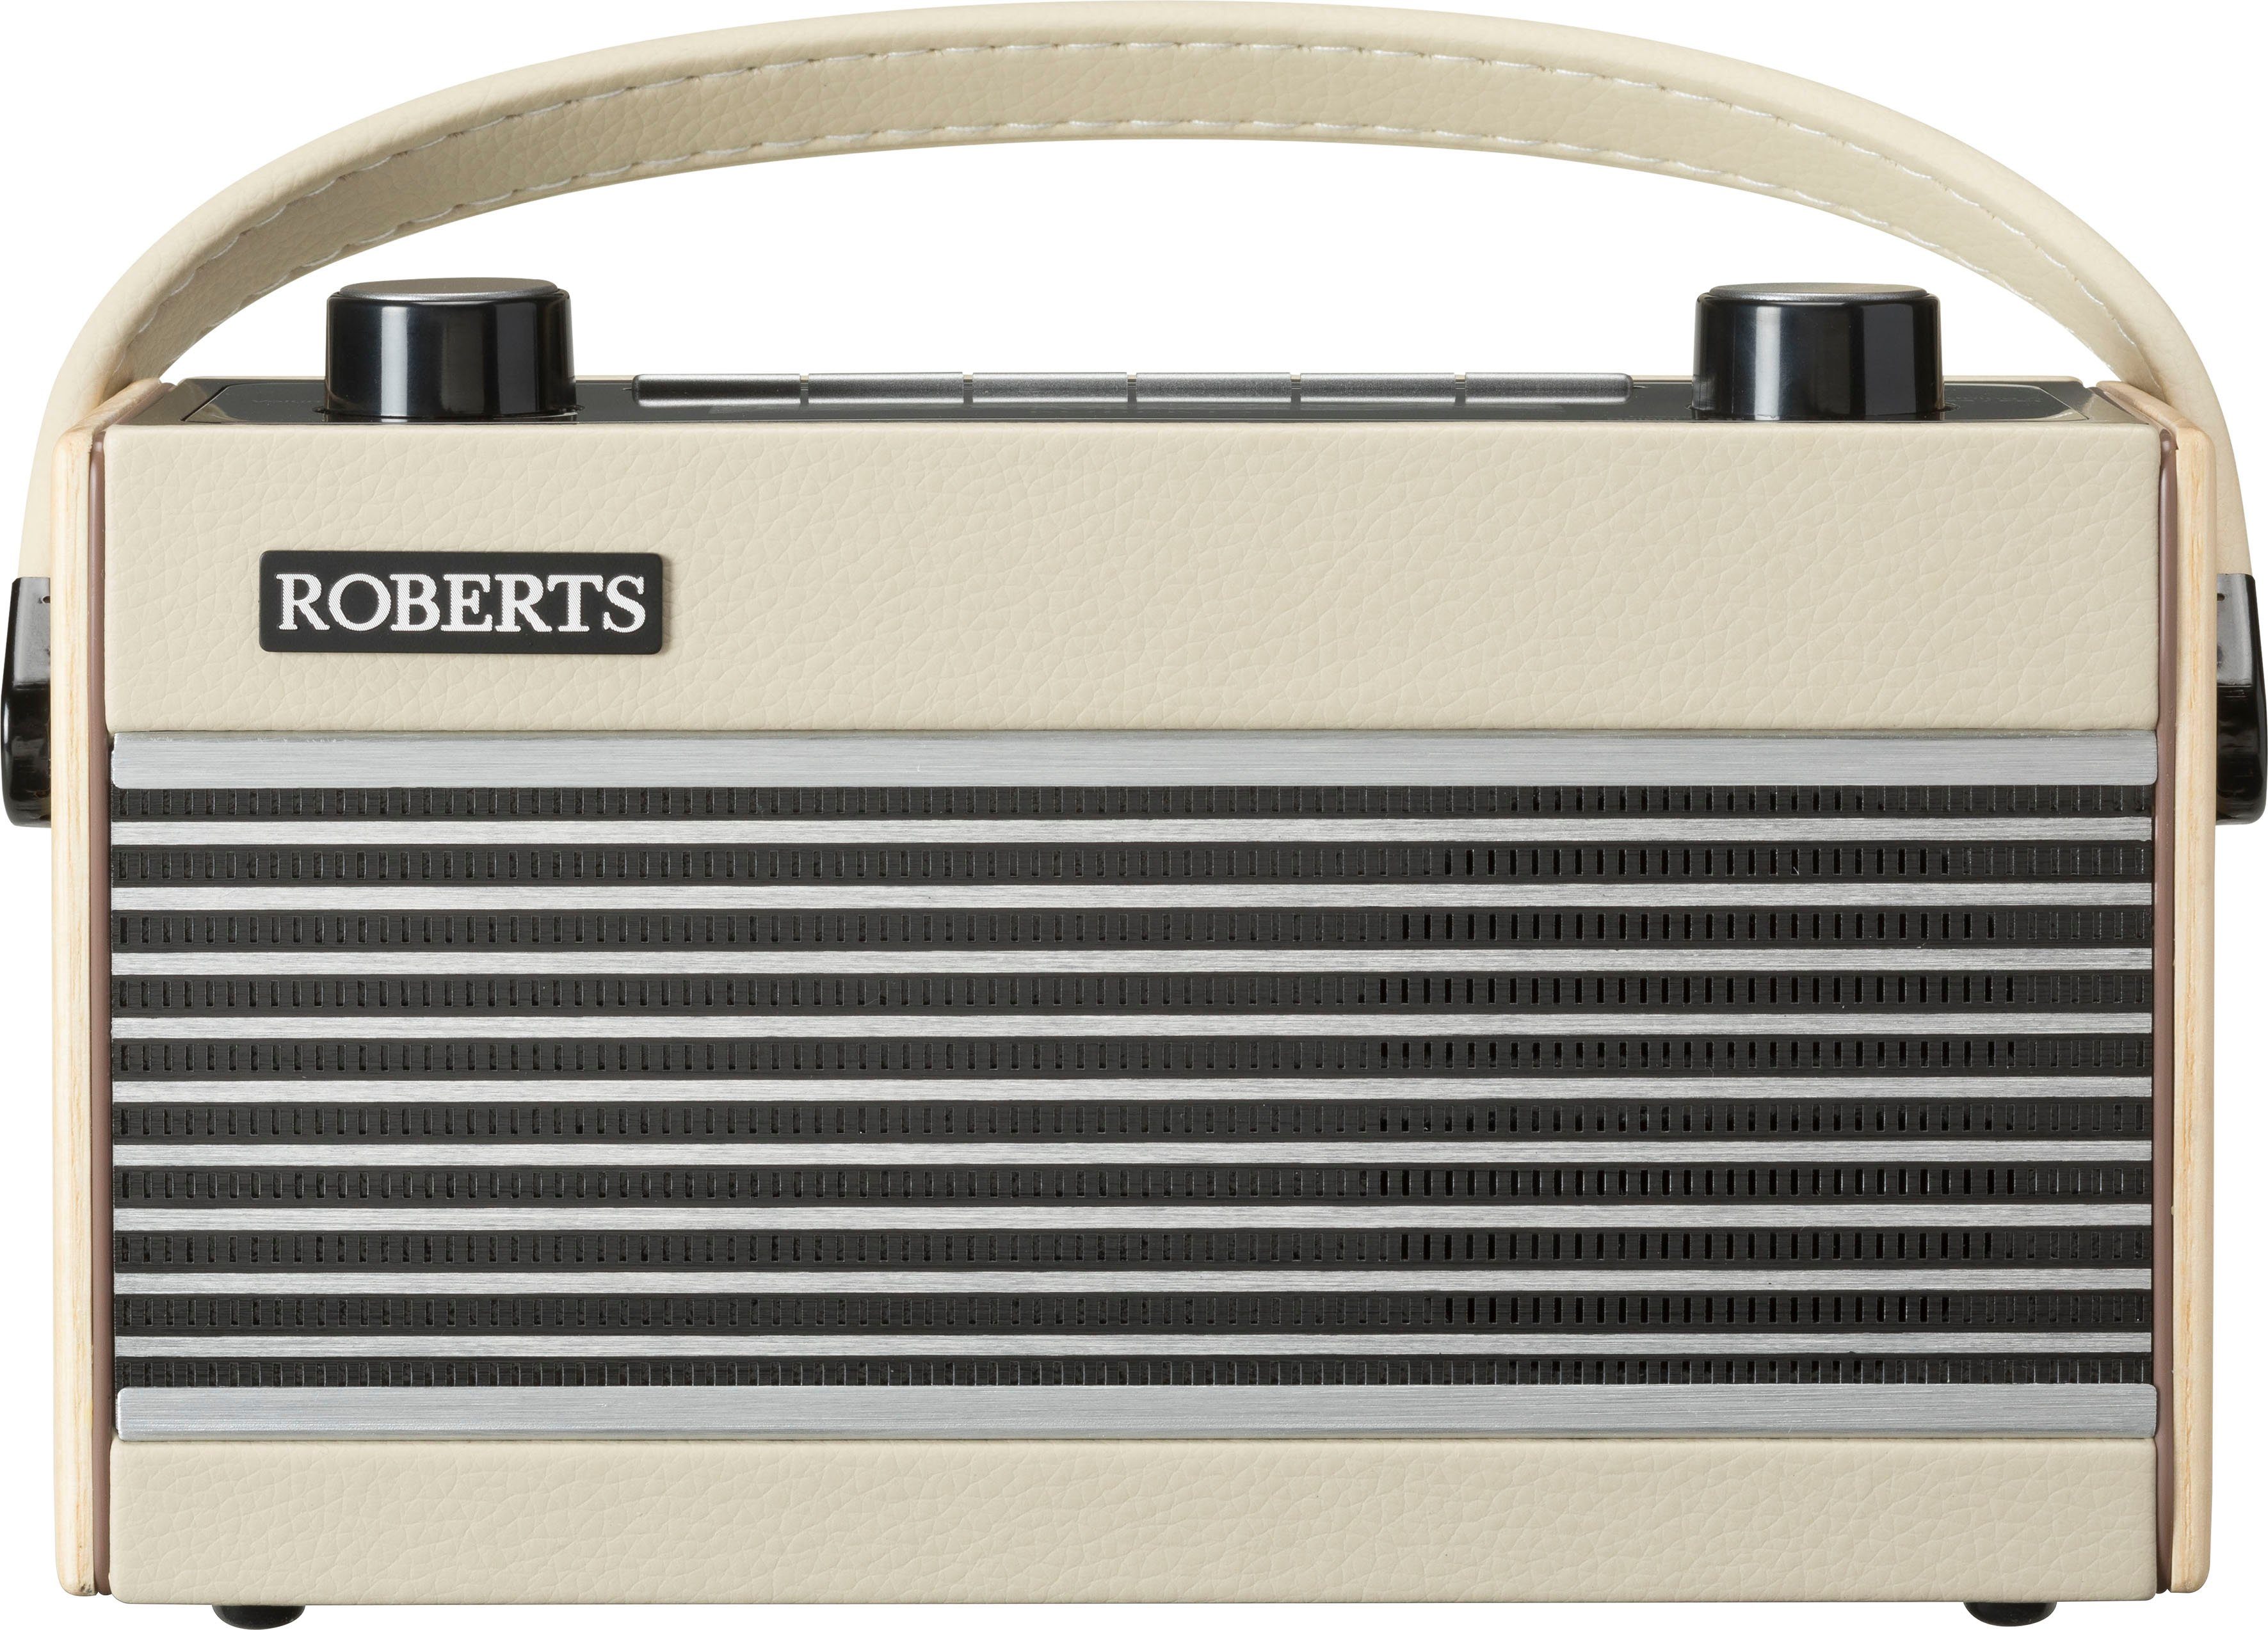 (DAB) Digitalradio RamblerBT (Digitalradio FM-Tuner) pastel ROBERTS RADIO (DAB), cream